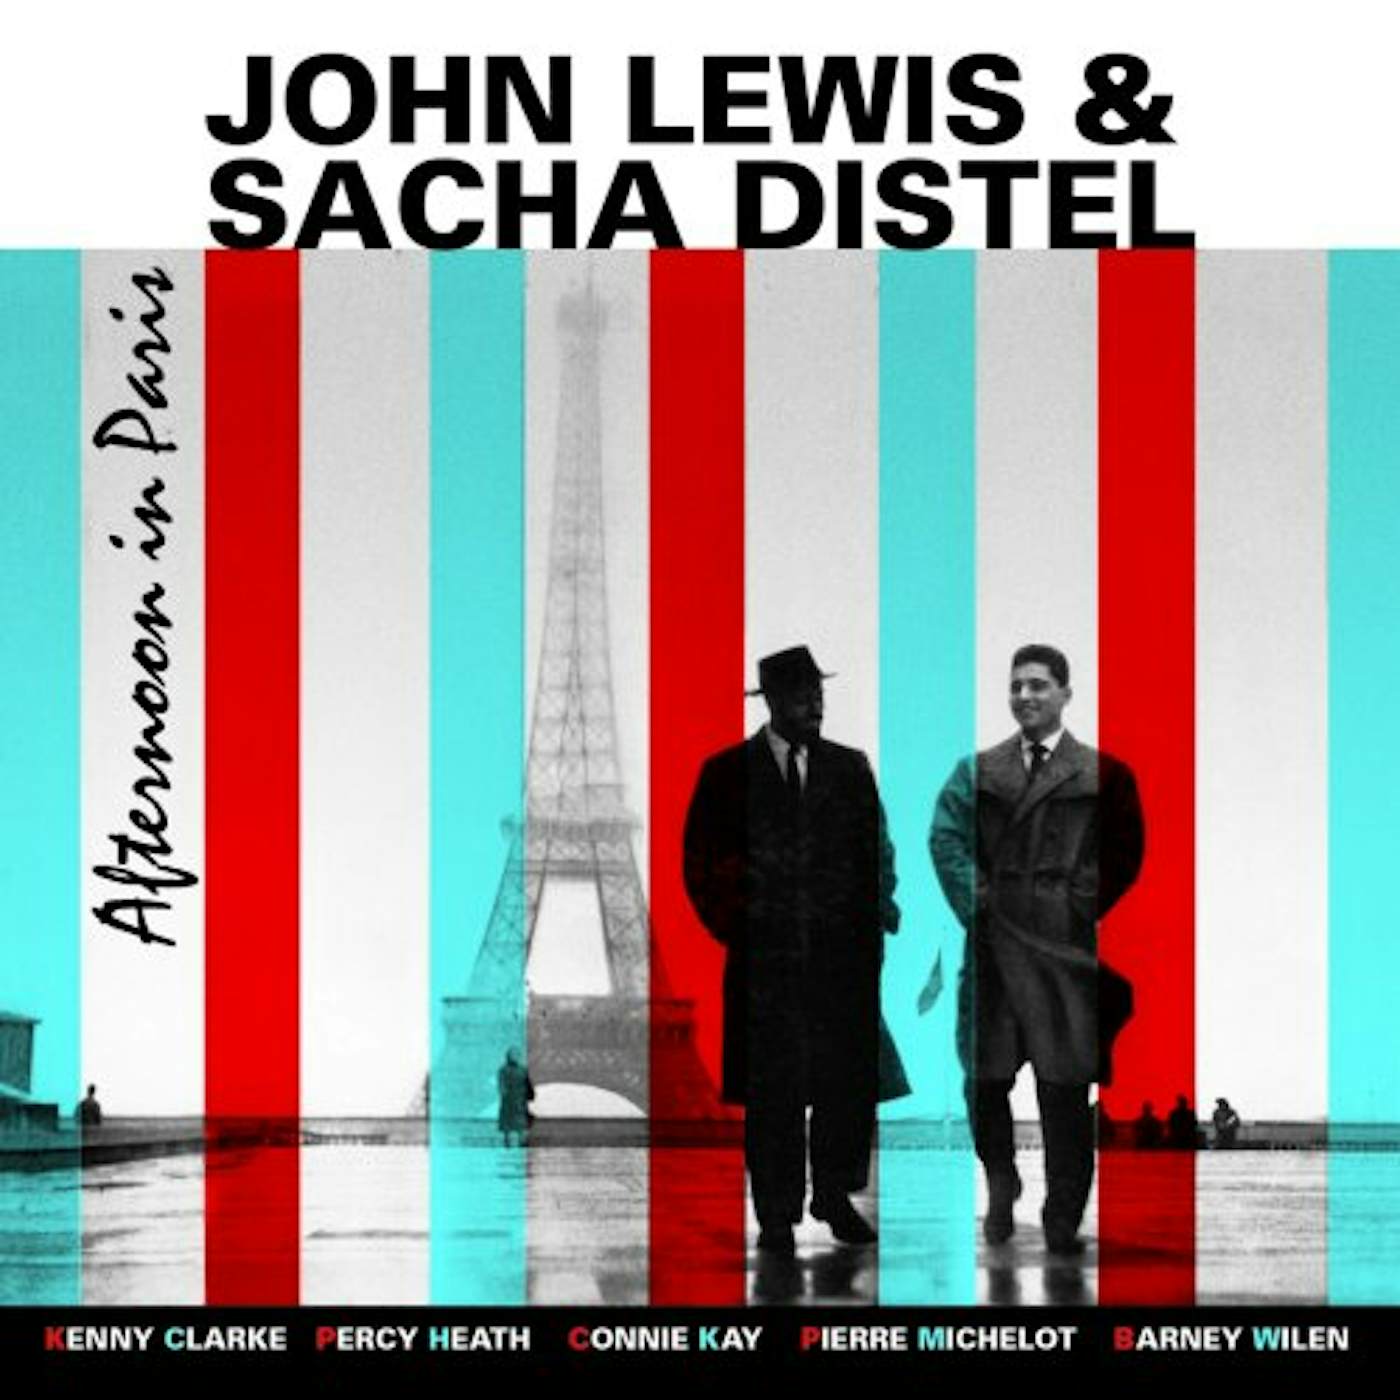 John Lewis & Sacha Distel AFTERNOON IN PARIS CD